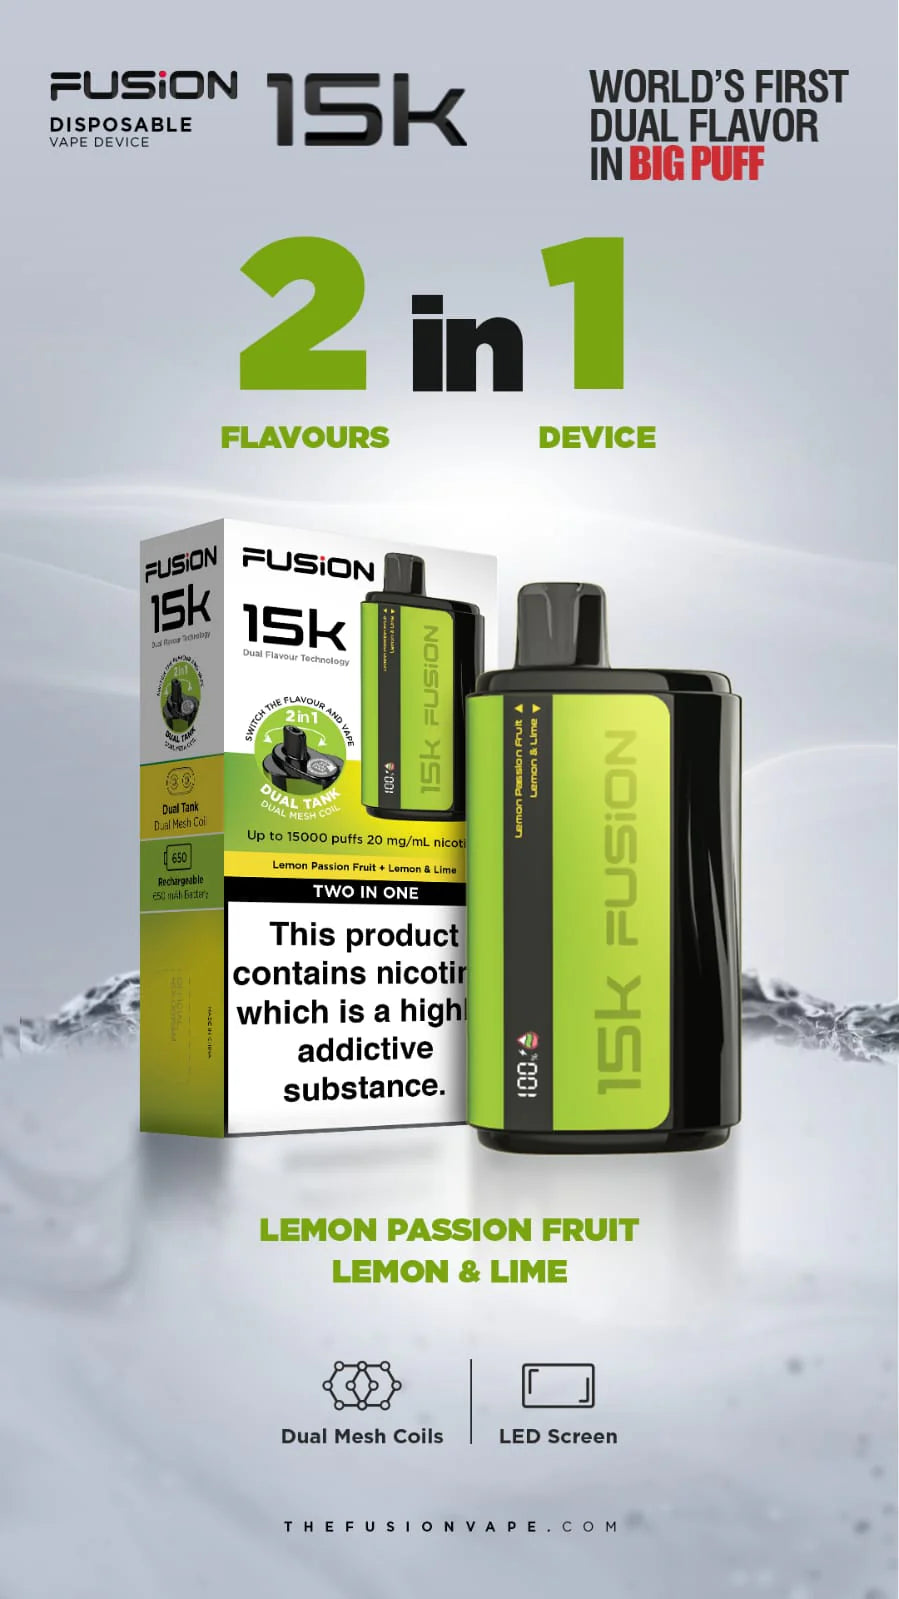 Lemon_Passion_Fruit_Lemon_Lime fusion 15k